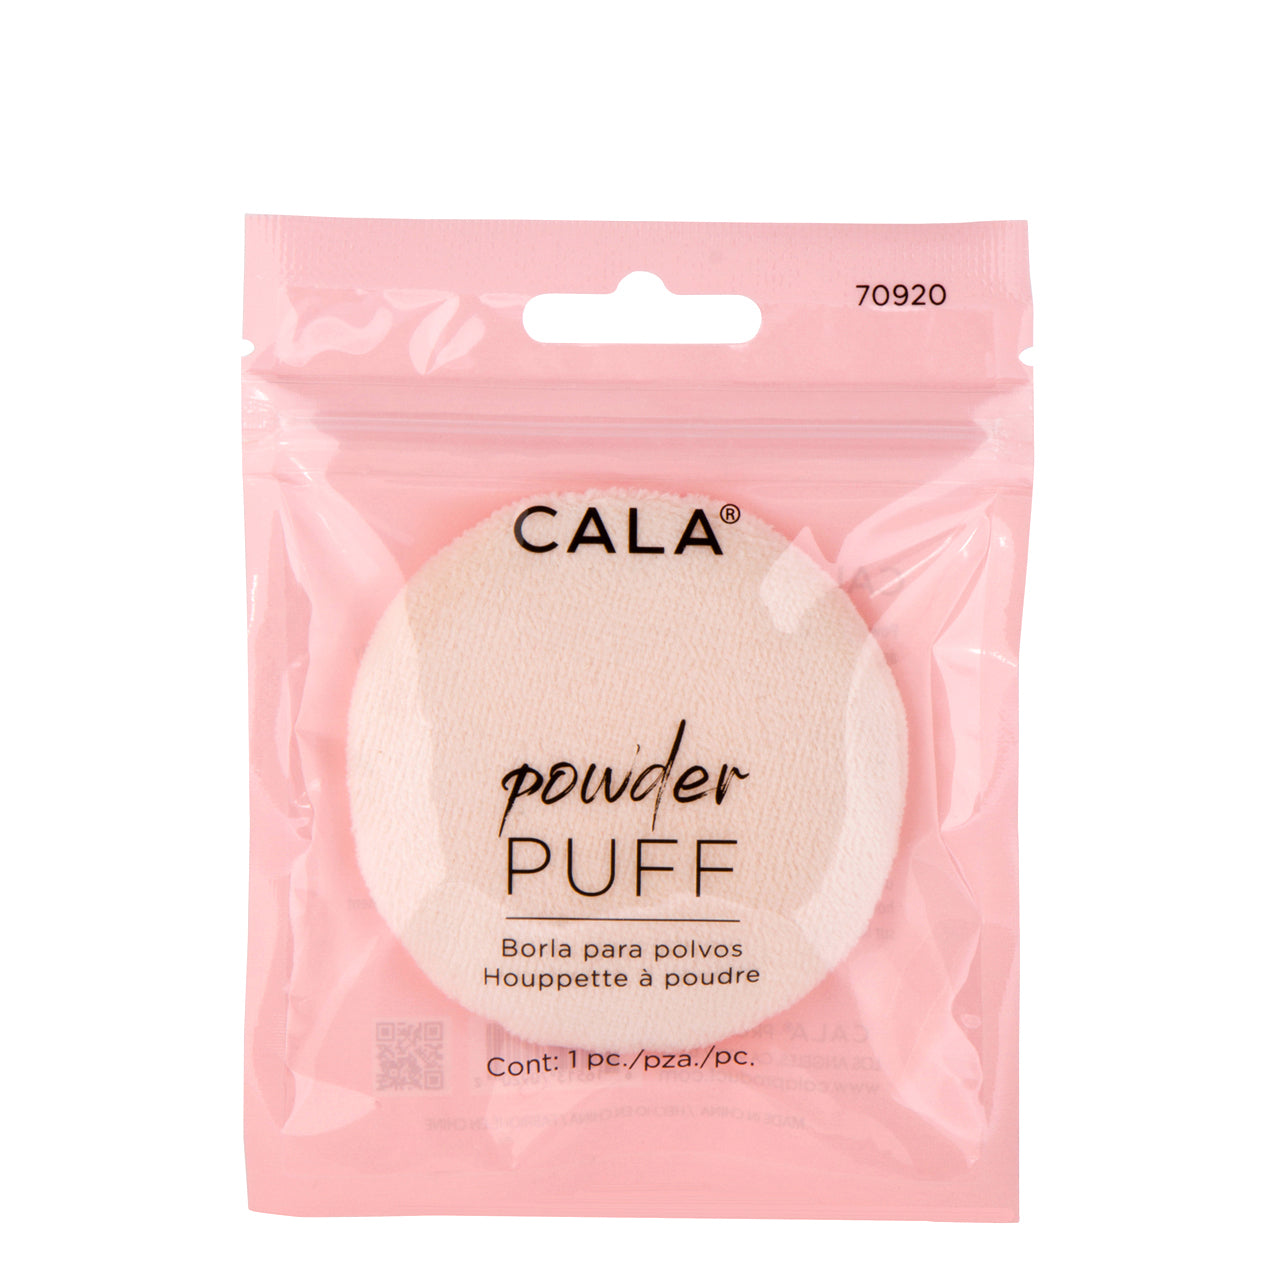 Cala Powder puff (70920)